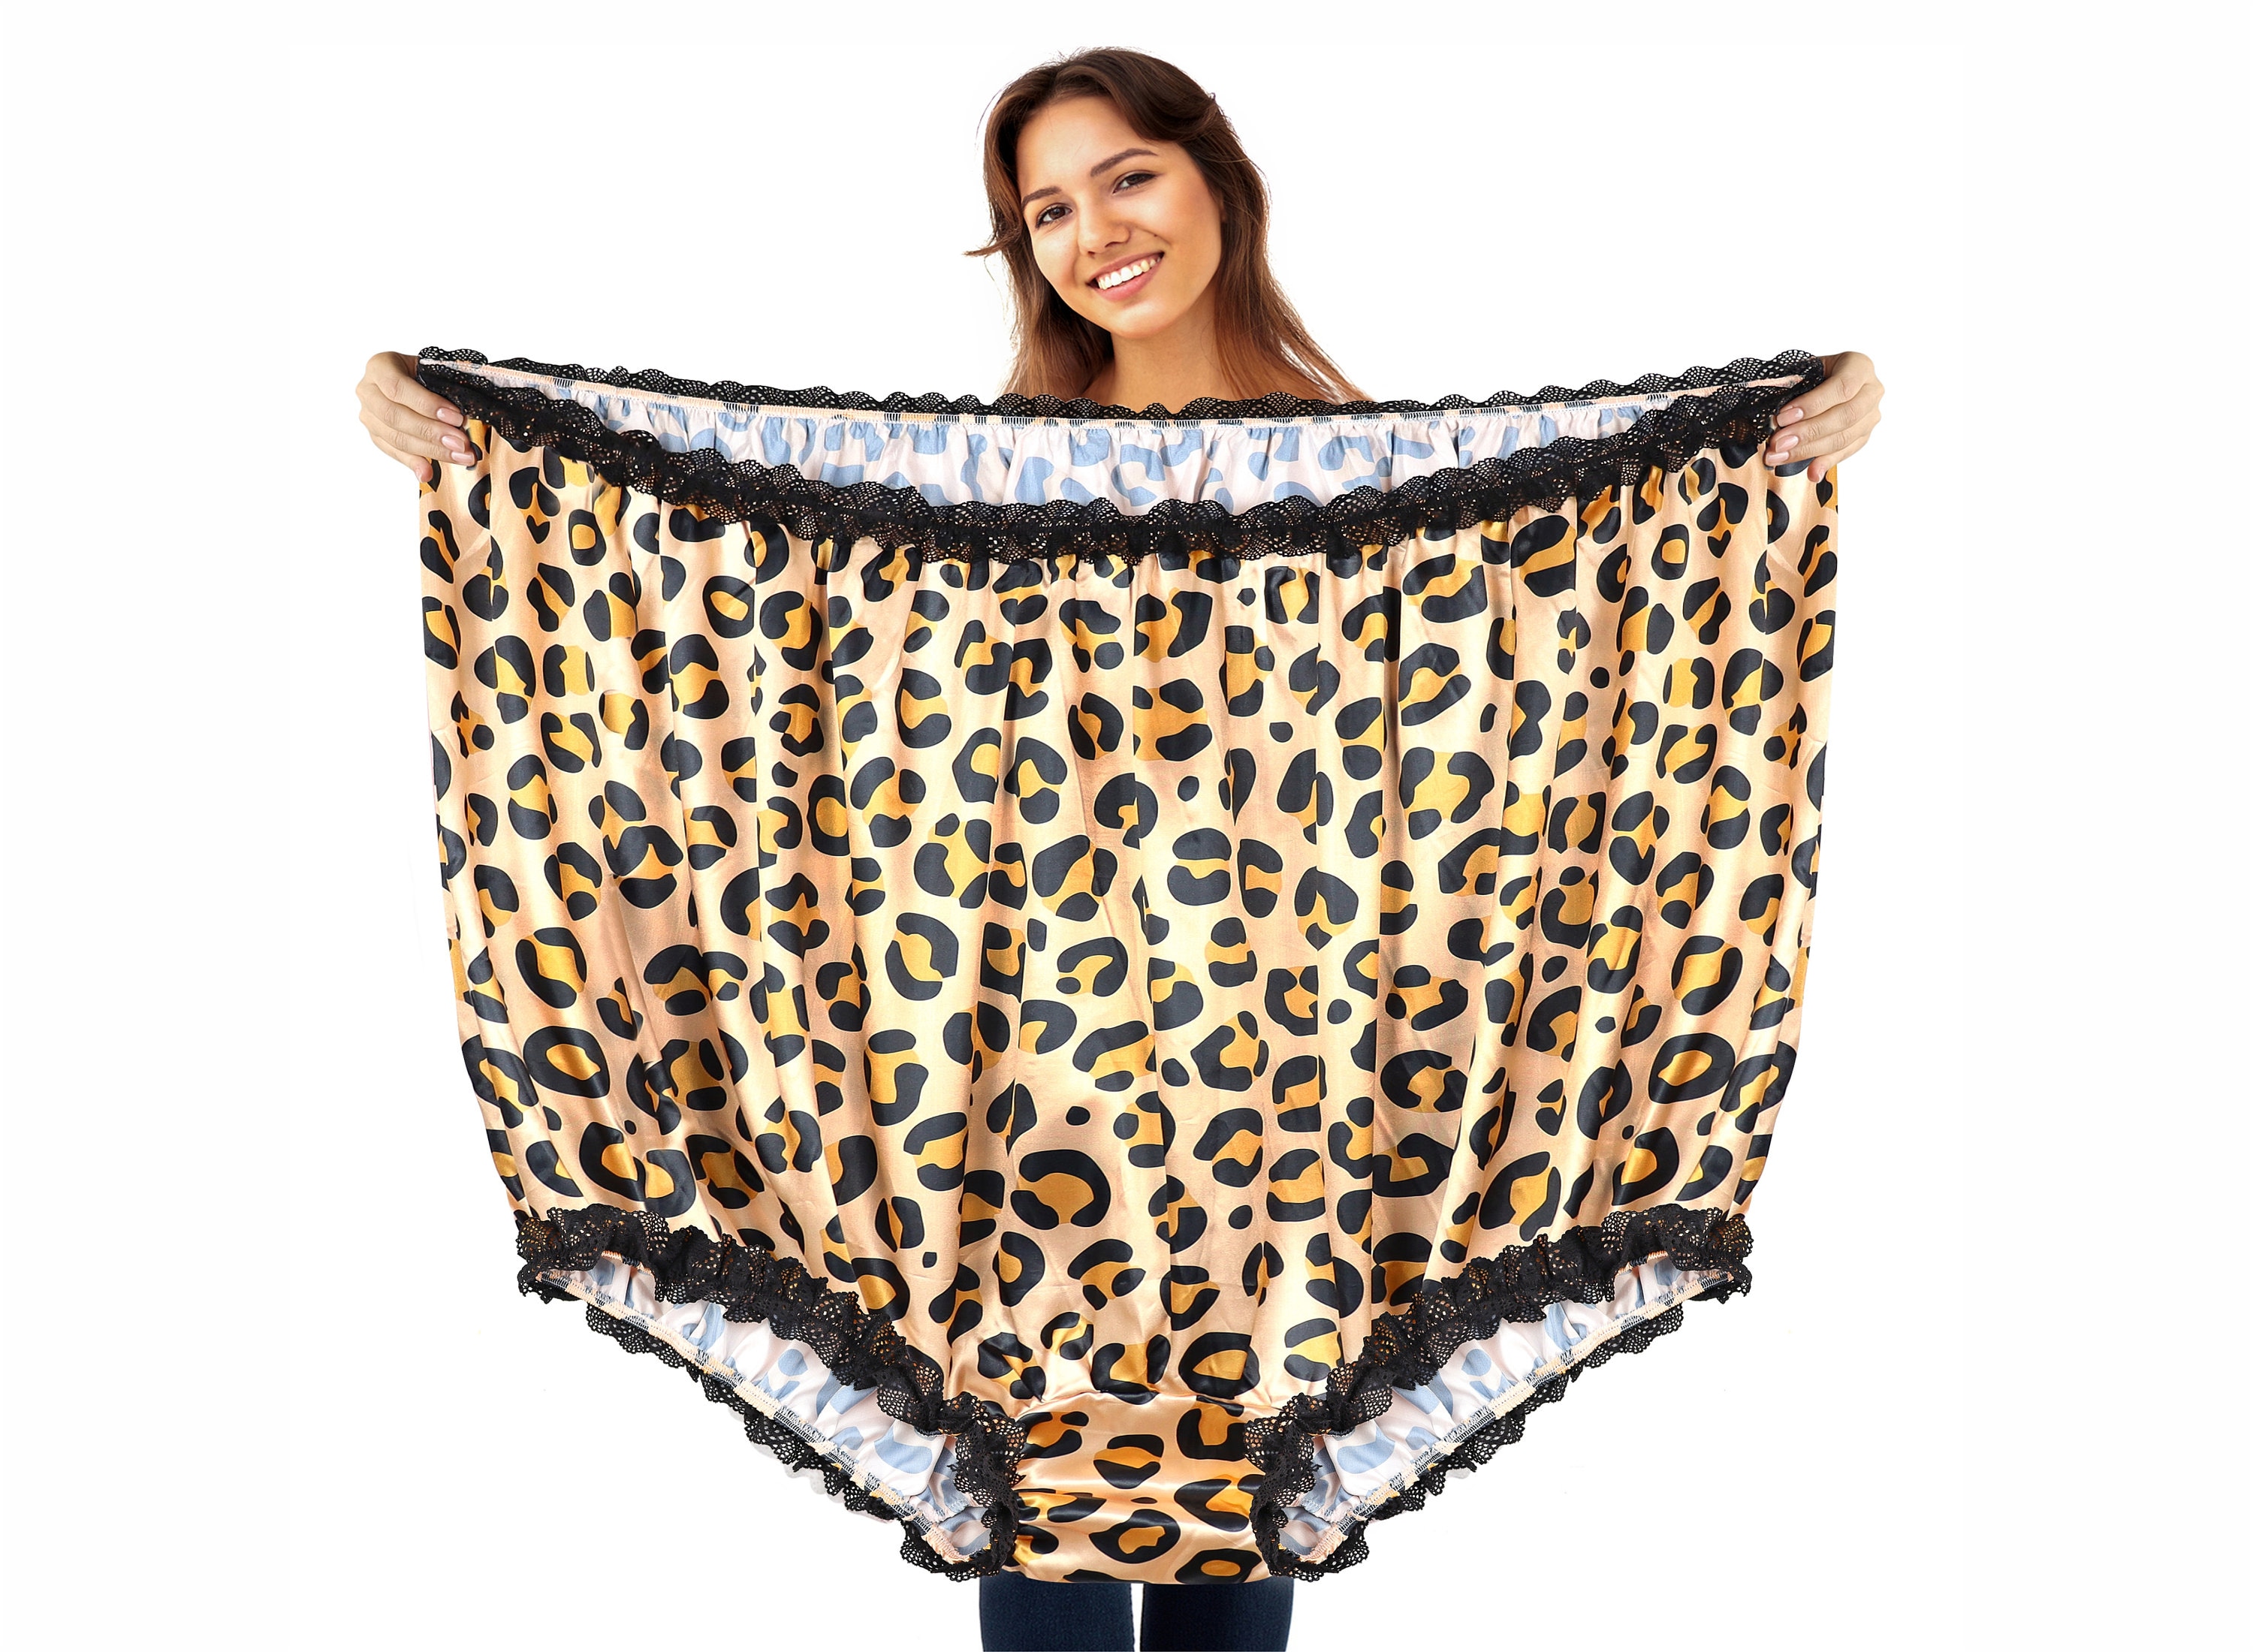 Giant Grand Mama Leopard Print Undies, Big Momma Undies, Funny Joke Gag  Gift Oversized Funny Adult Gift Novelty Underwear, Granny Panties 